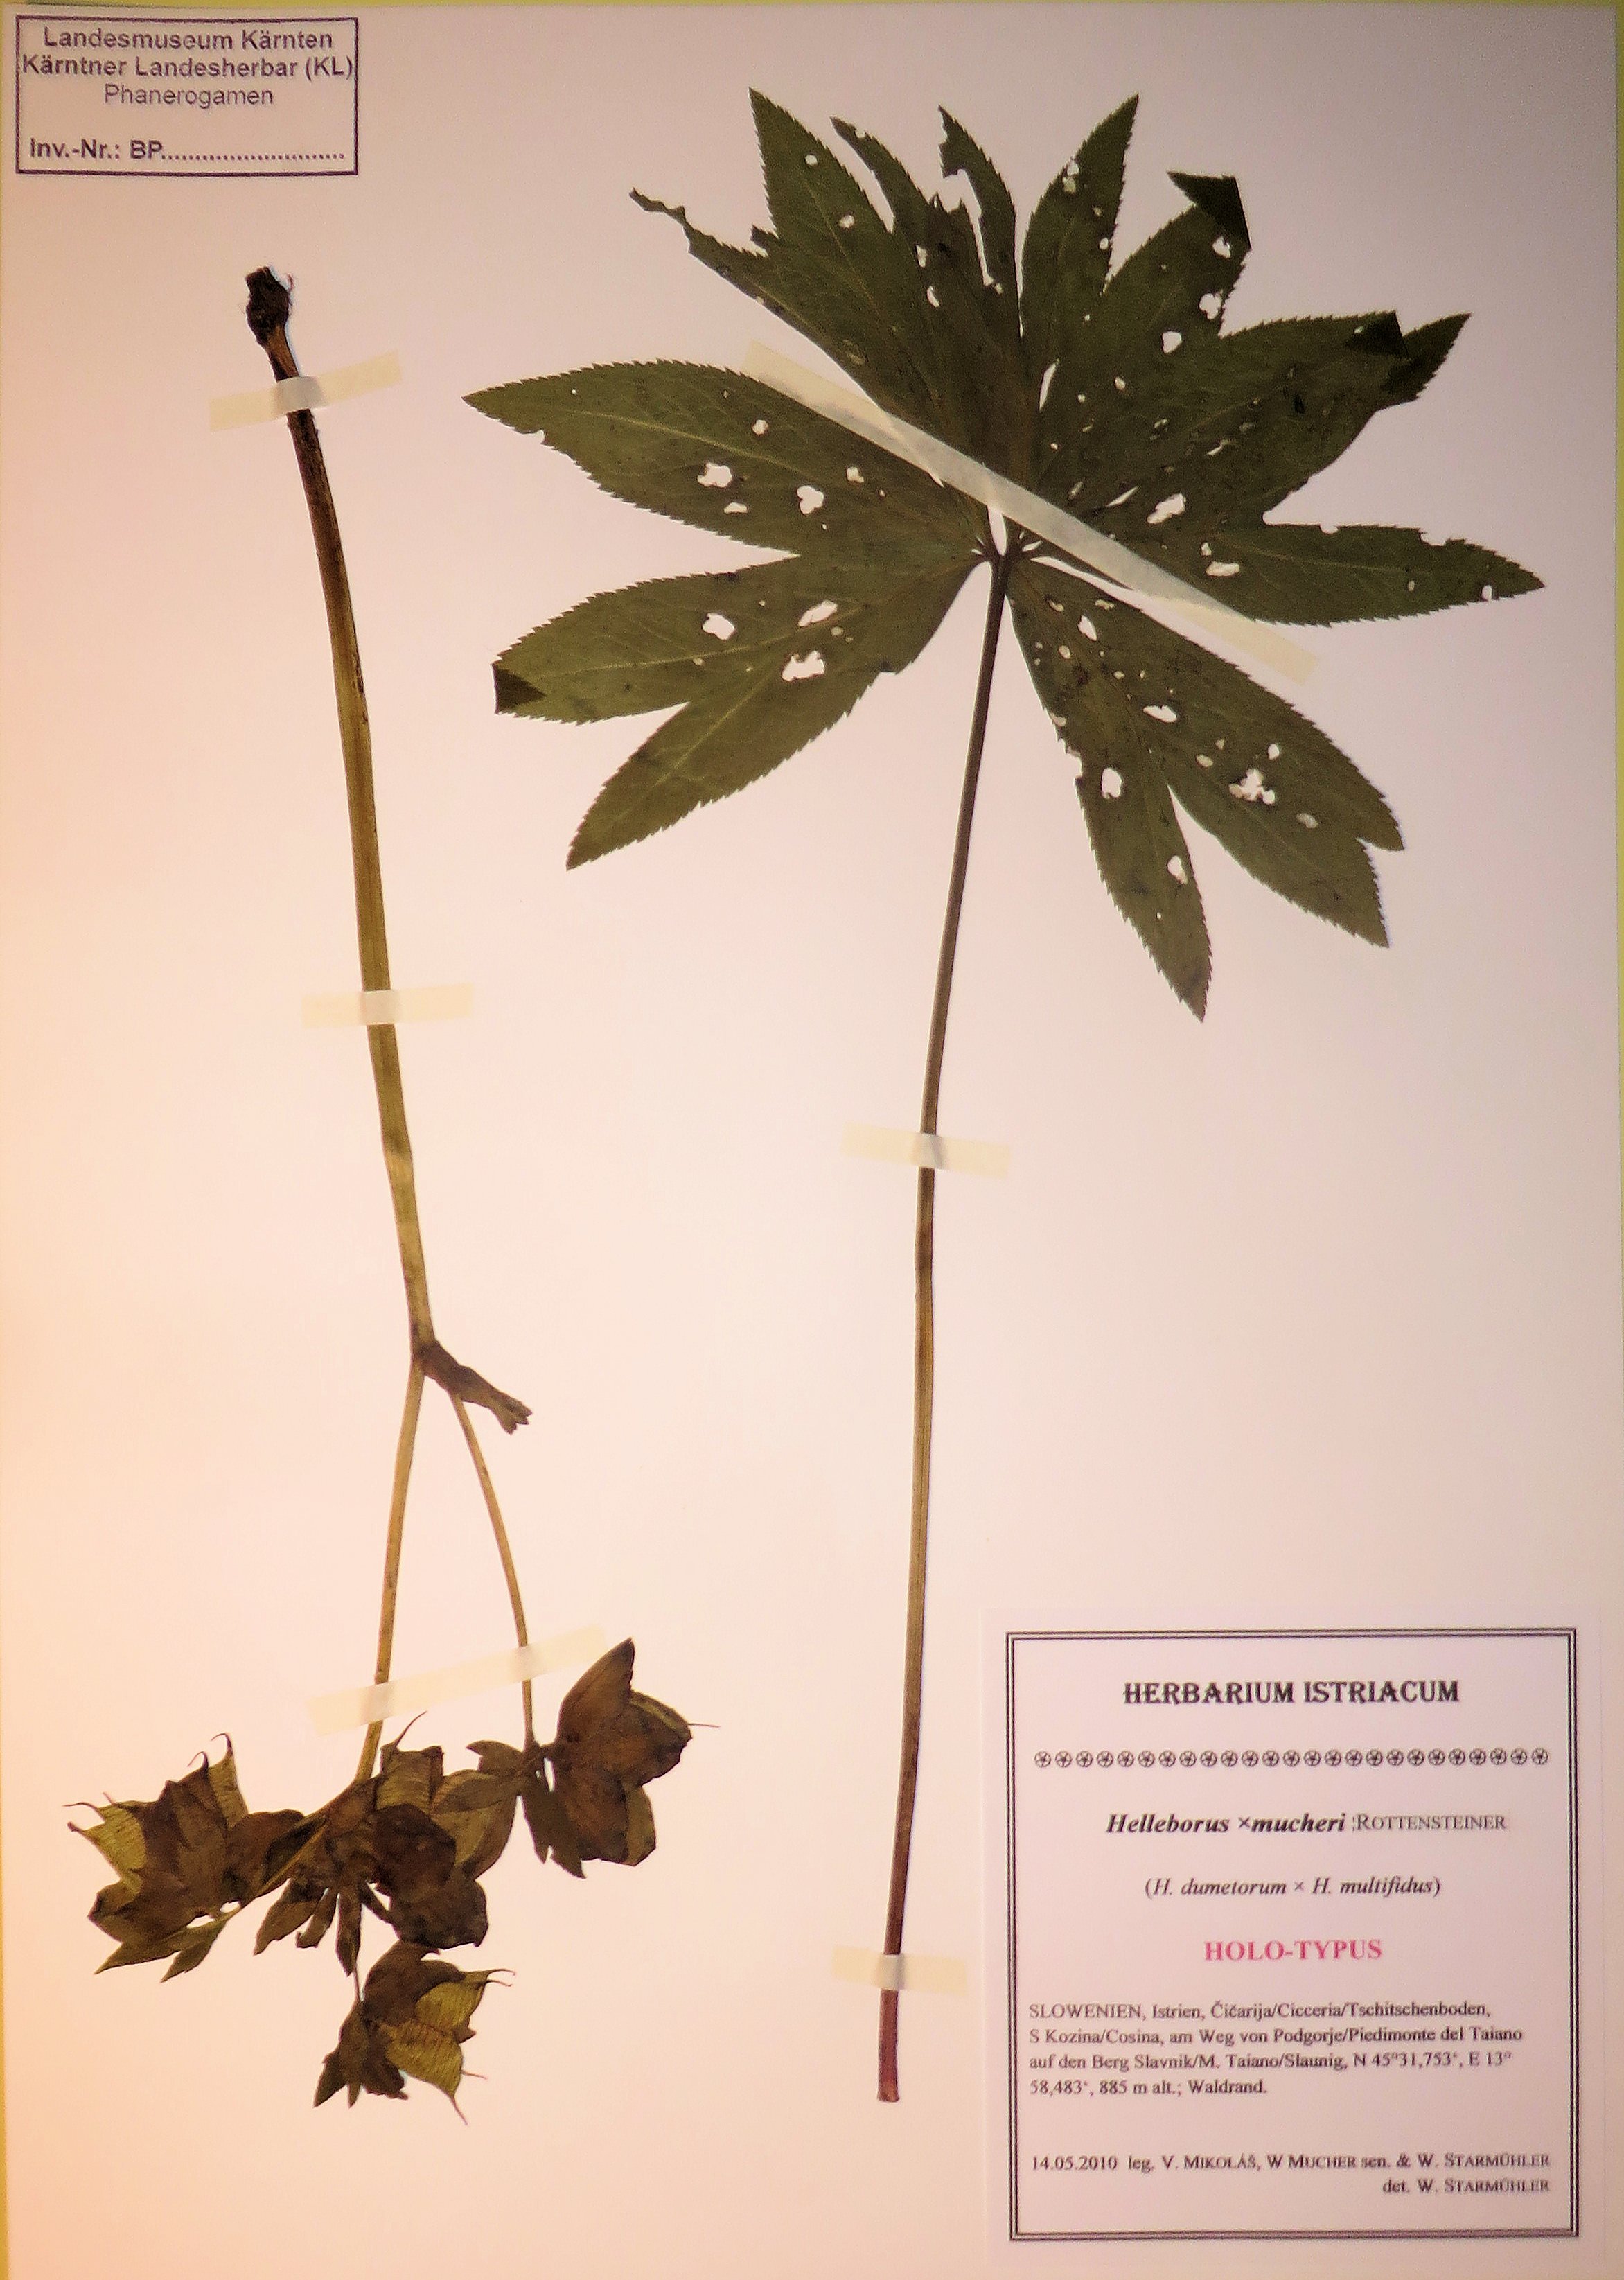 Fig. 11. Holotype specimen of Helleborus ×mucheri in the herbarium KL-Herbarium Istriacum.